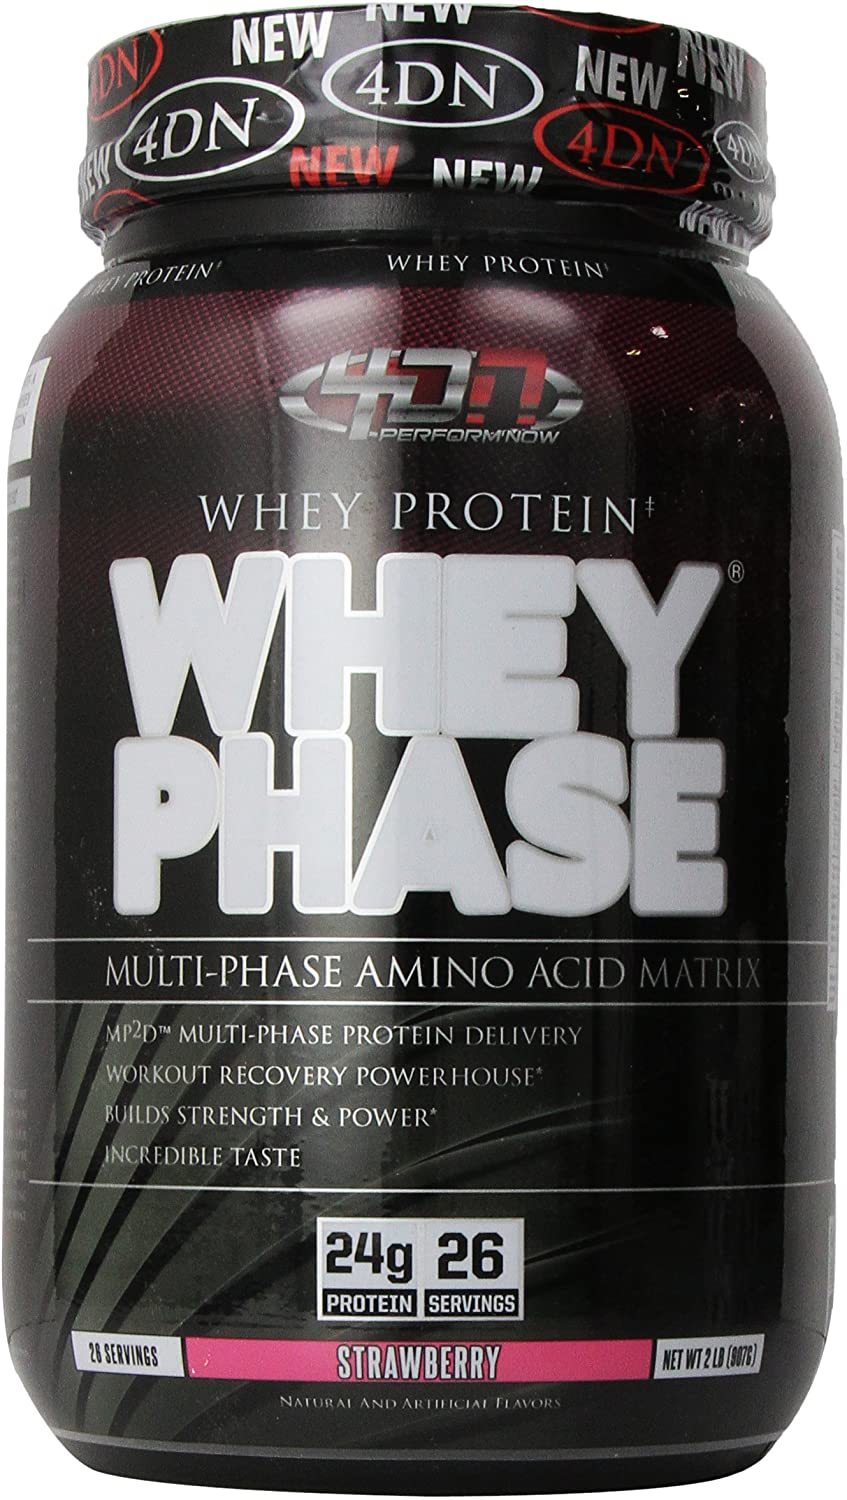 4DN Whey Phase Whey Protein Powder, with glutamine, creatine, Strawberry, 2 Lbs - $24.99